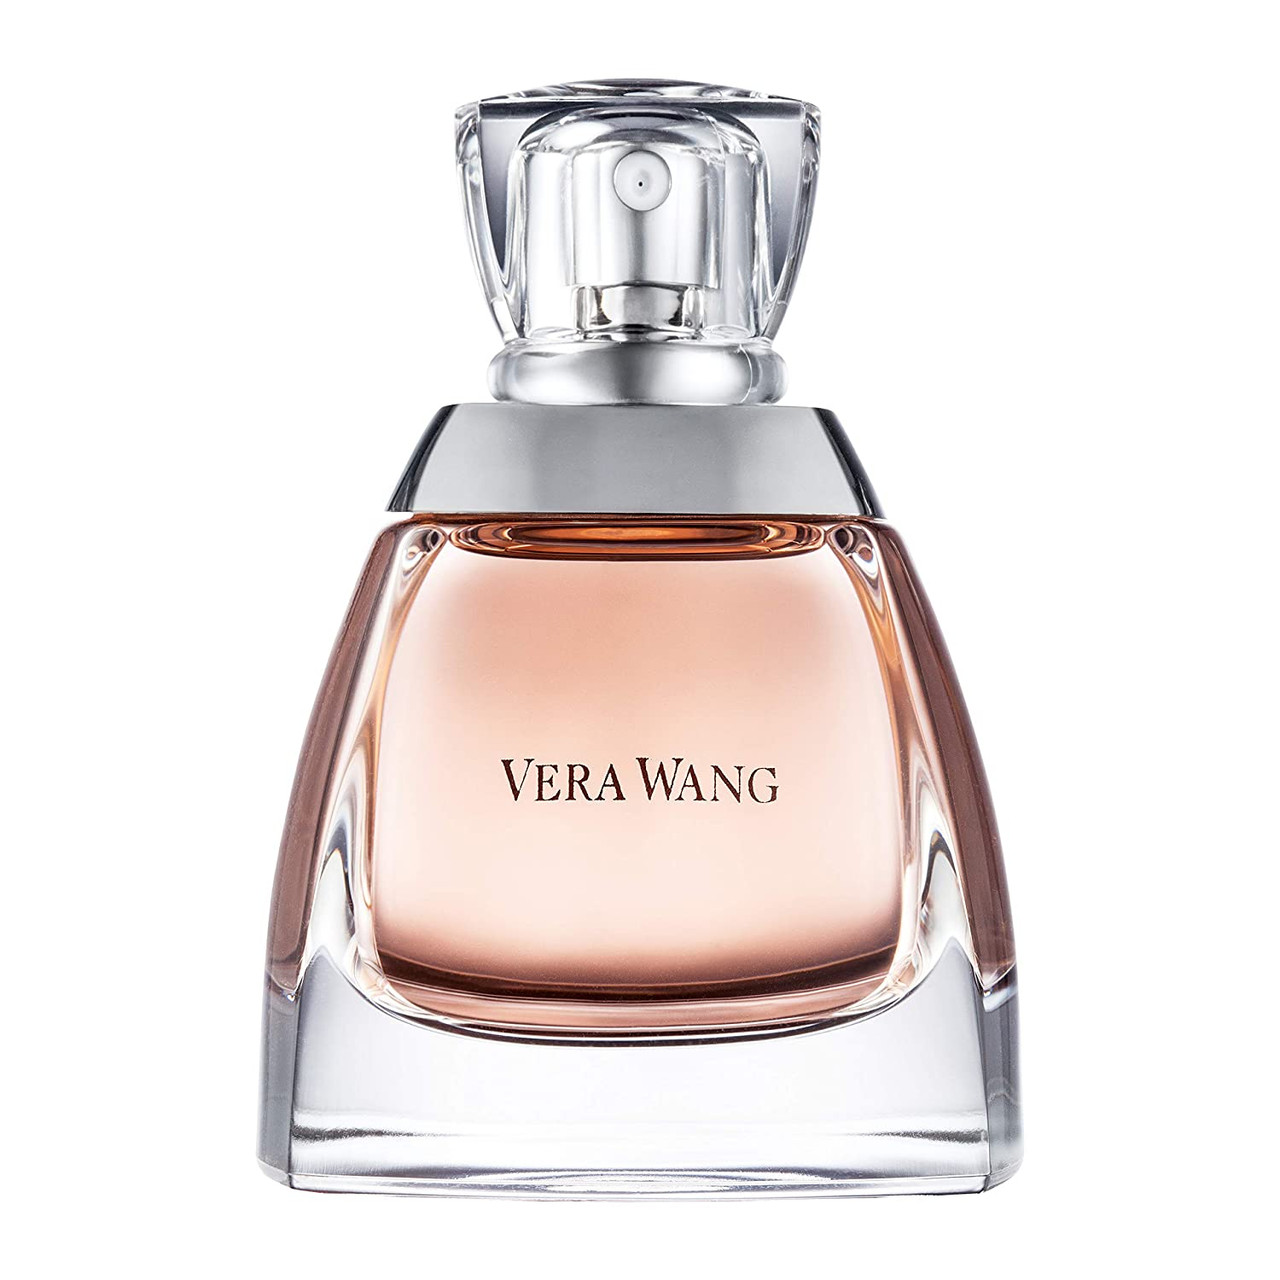 Vera Wang - perfumes for women -100ml, Eau de Parfum price in UAE,   UAE